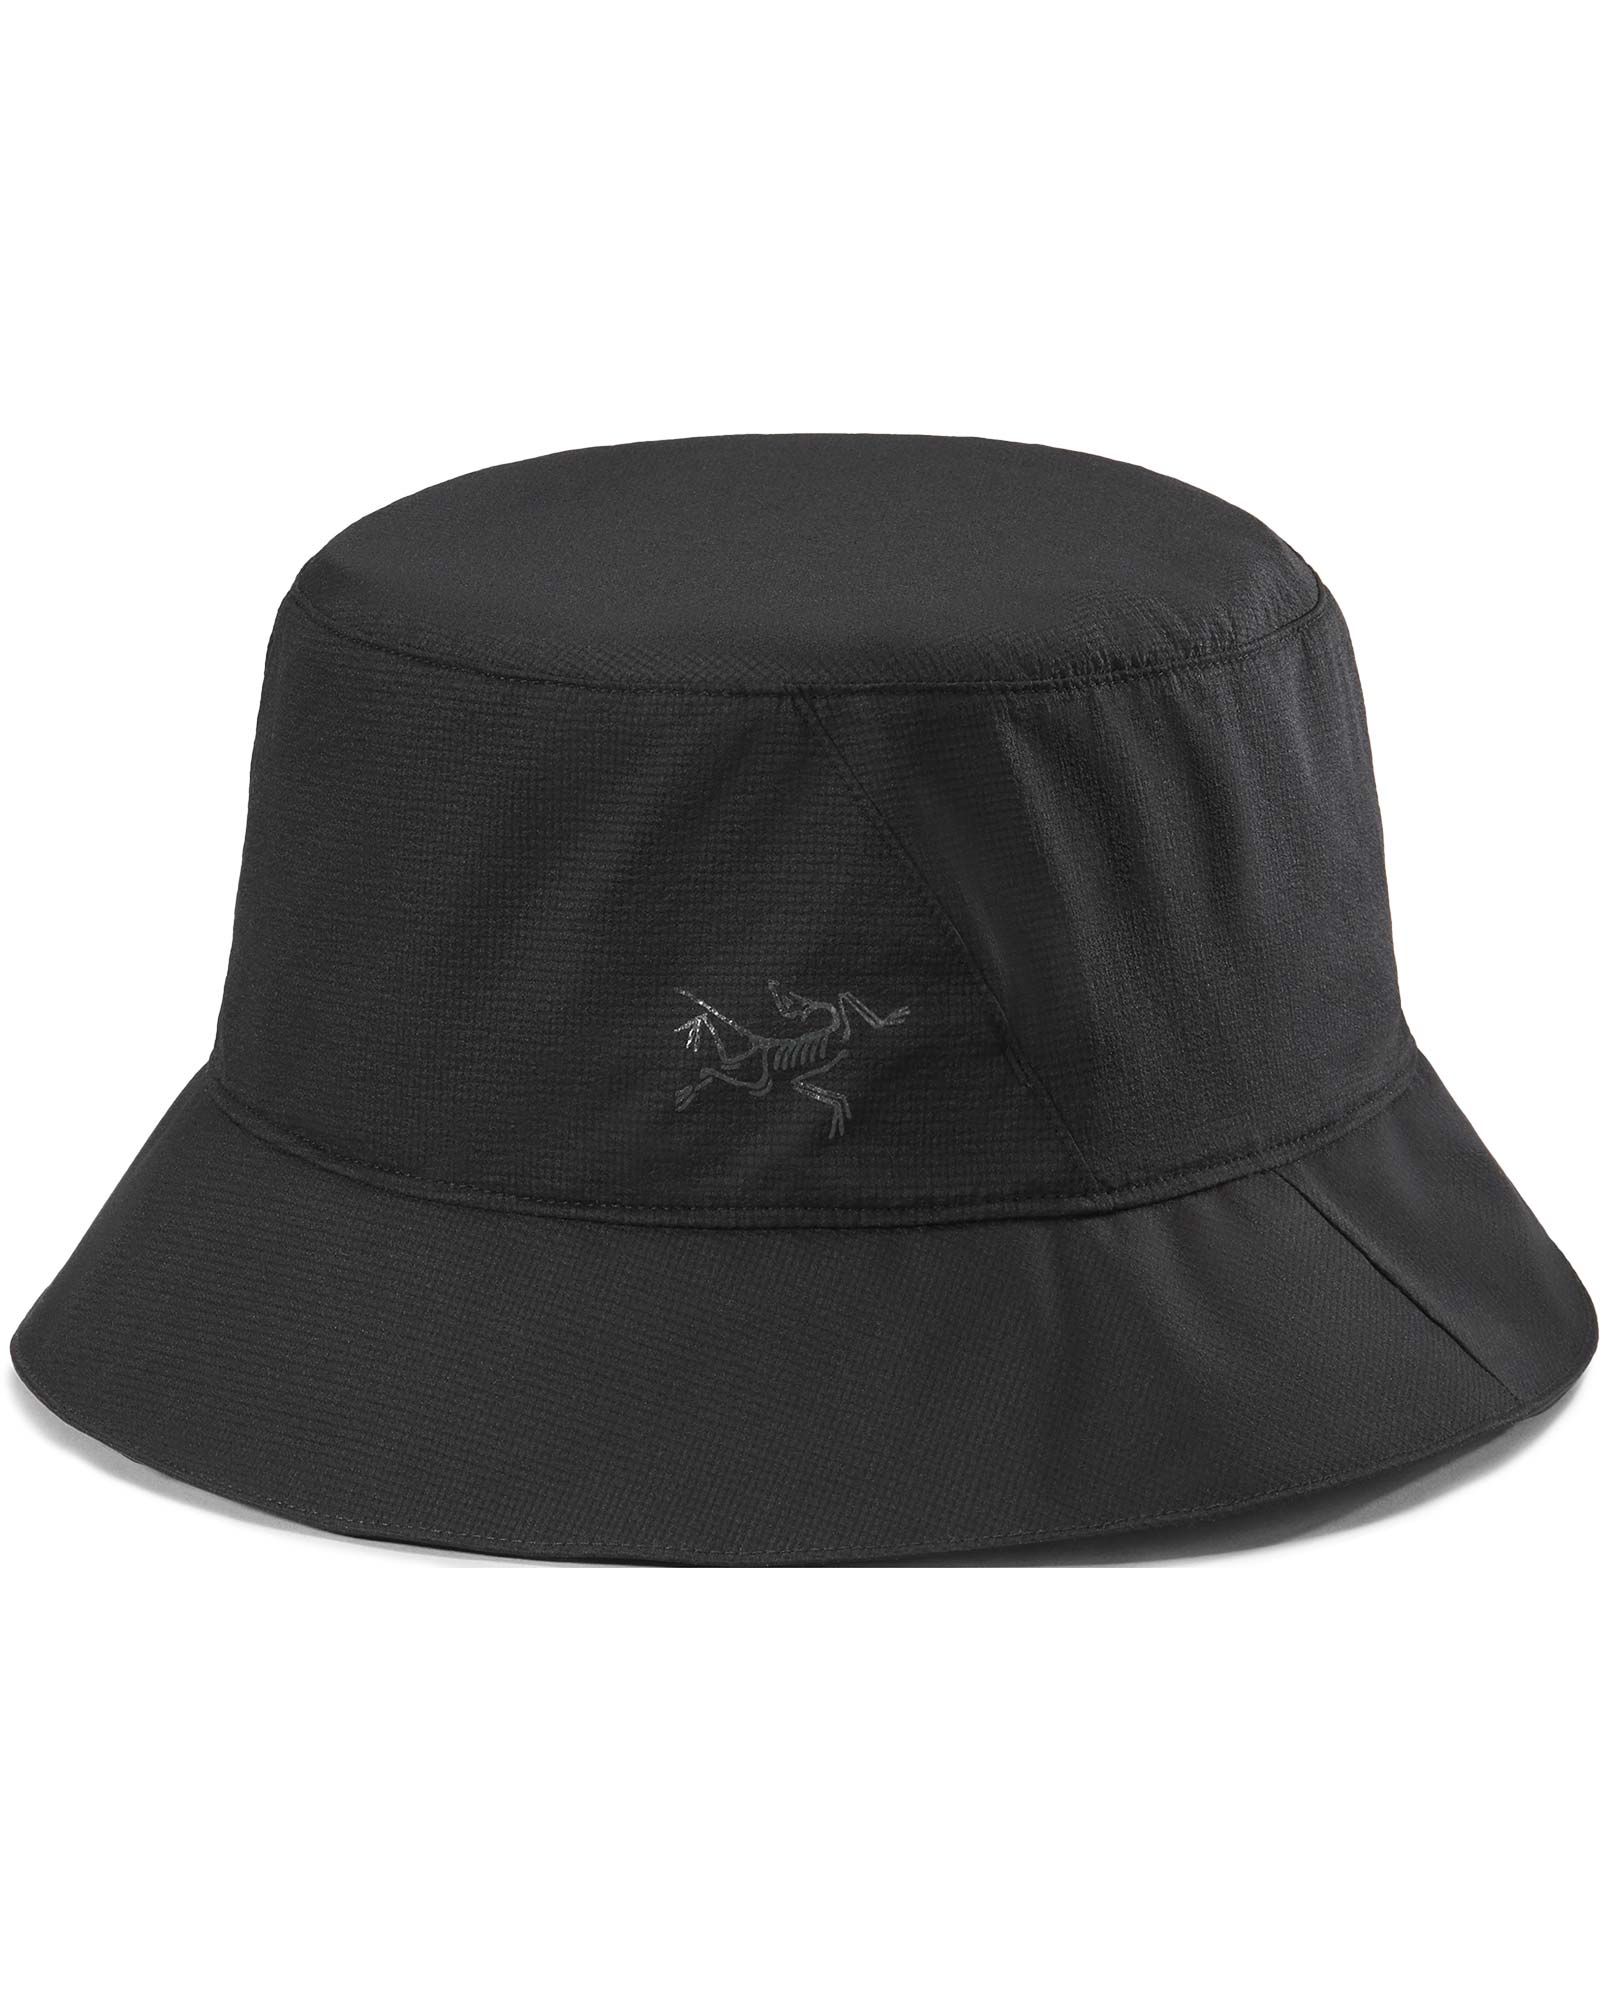 Arc'teryx Aerios Bucket Hat